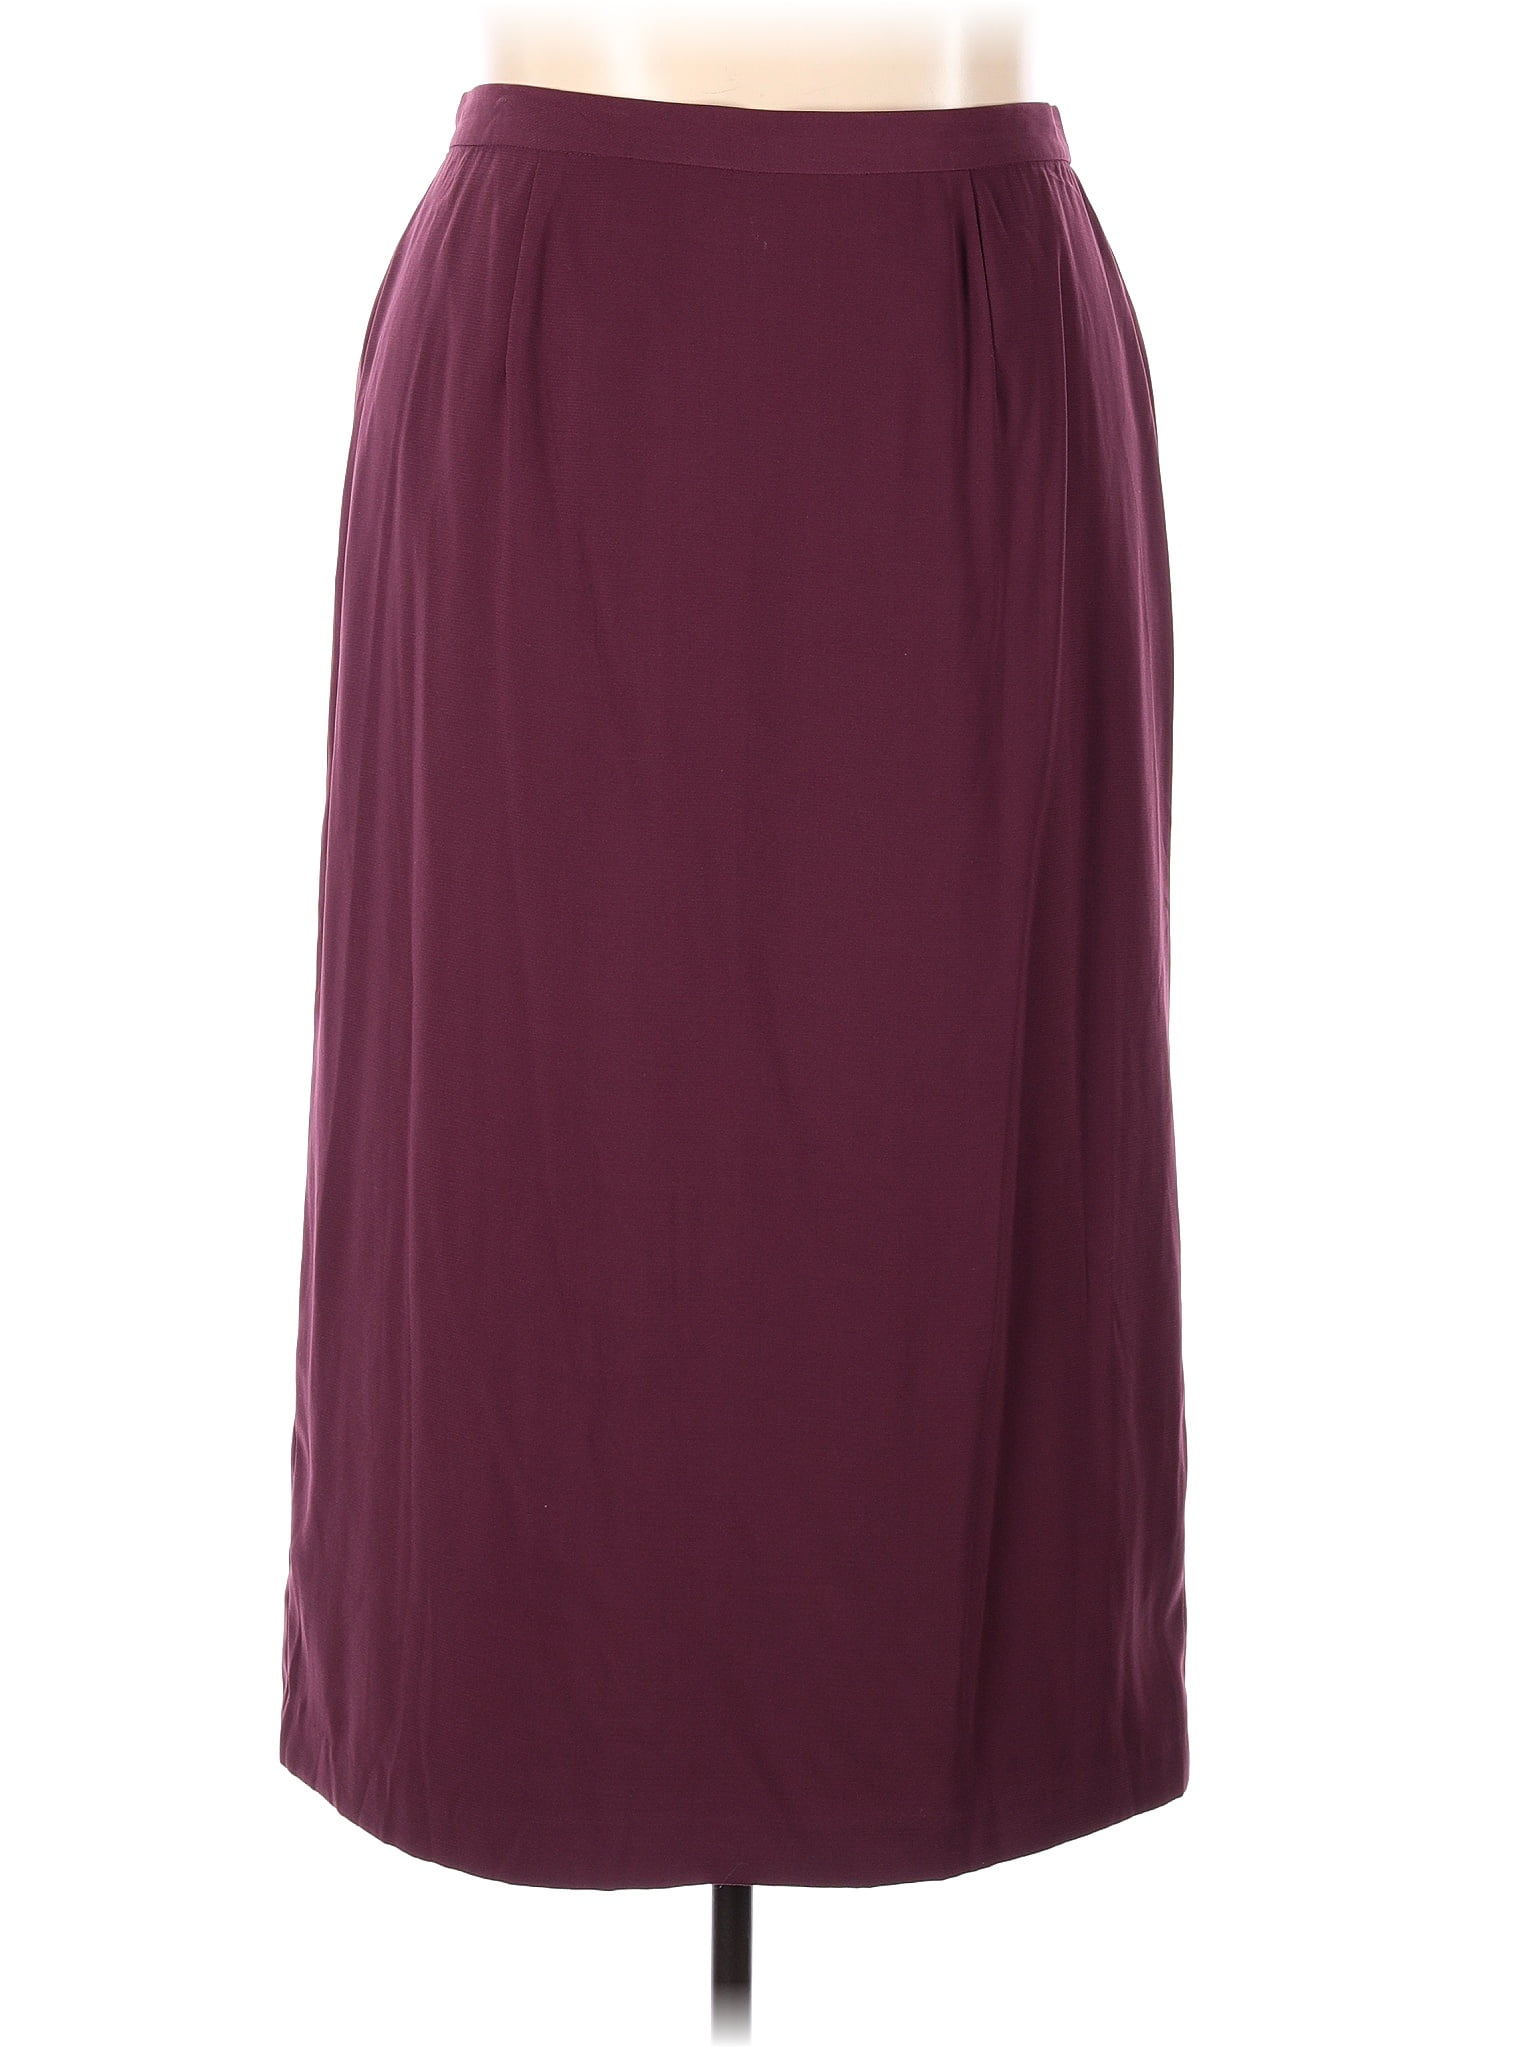 DressBarn 100% Polyester Burgundy Casual Skirt Size 18 (Plus) - 41% off ...